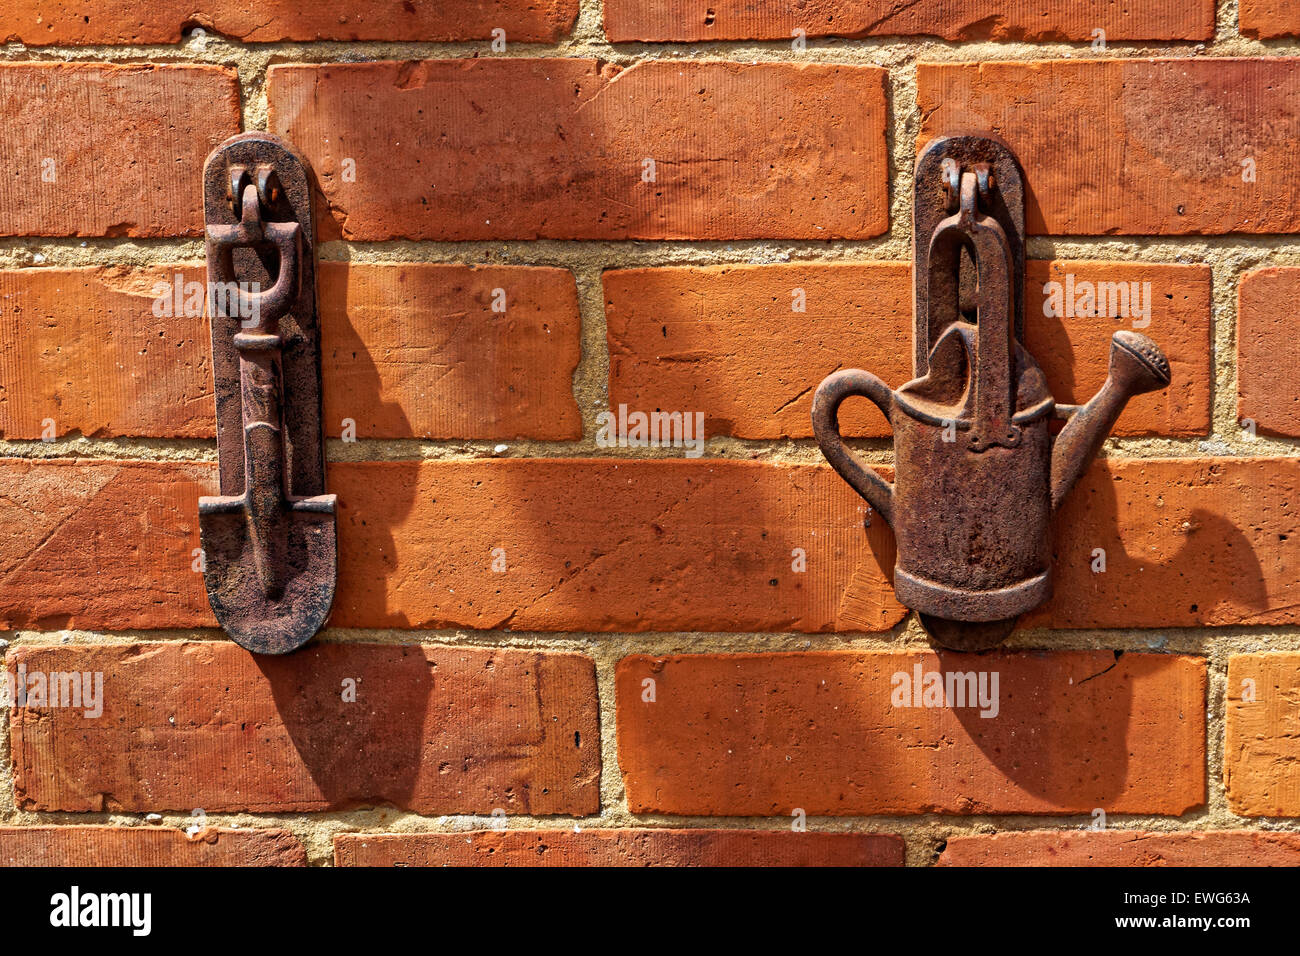 Iron garden ornaments on brick wall Stock Photo